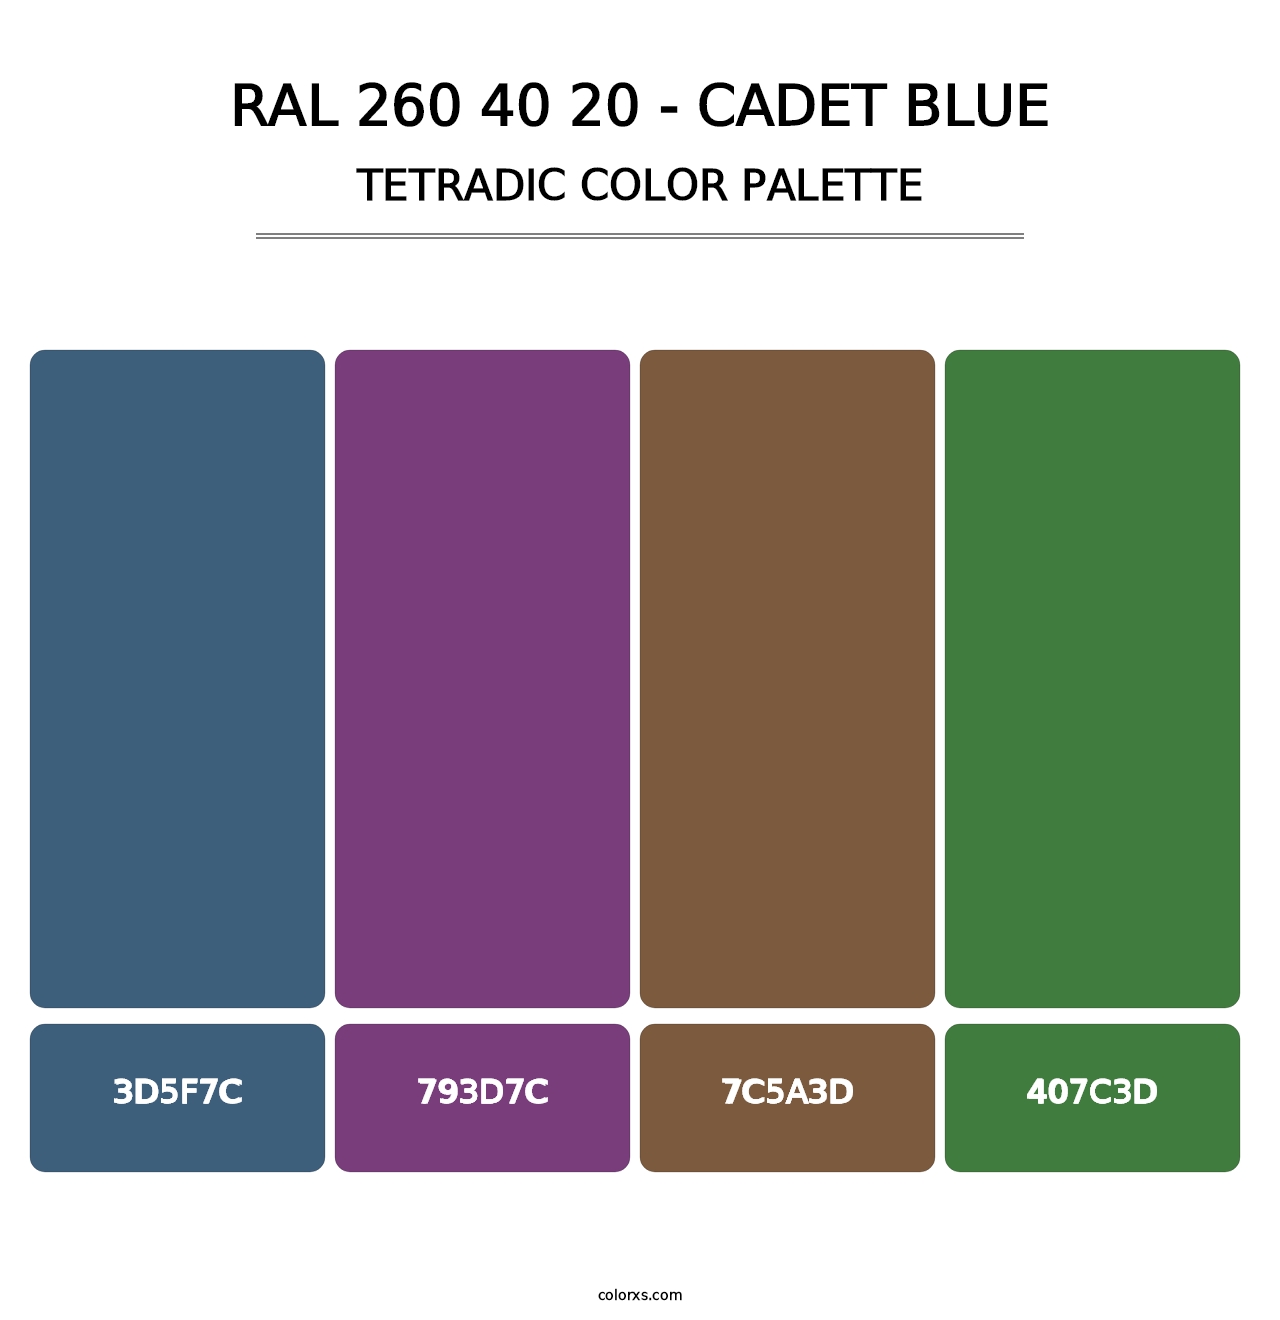 RAL 260 40 20 - Cadet Blue - Tetradic Color Palette